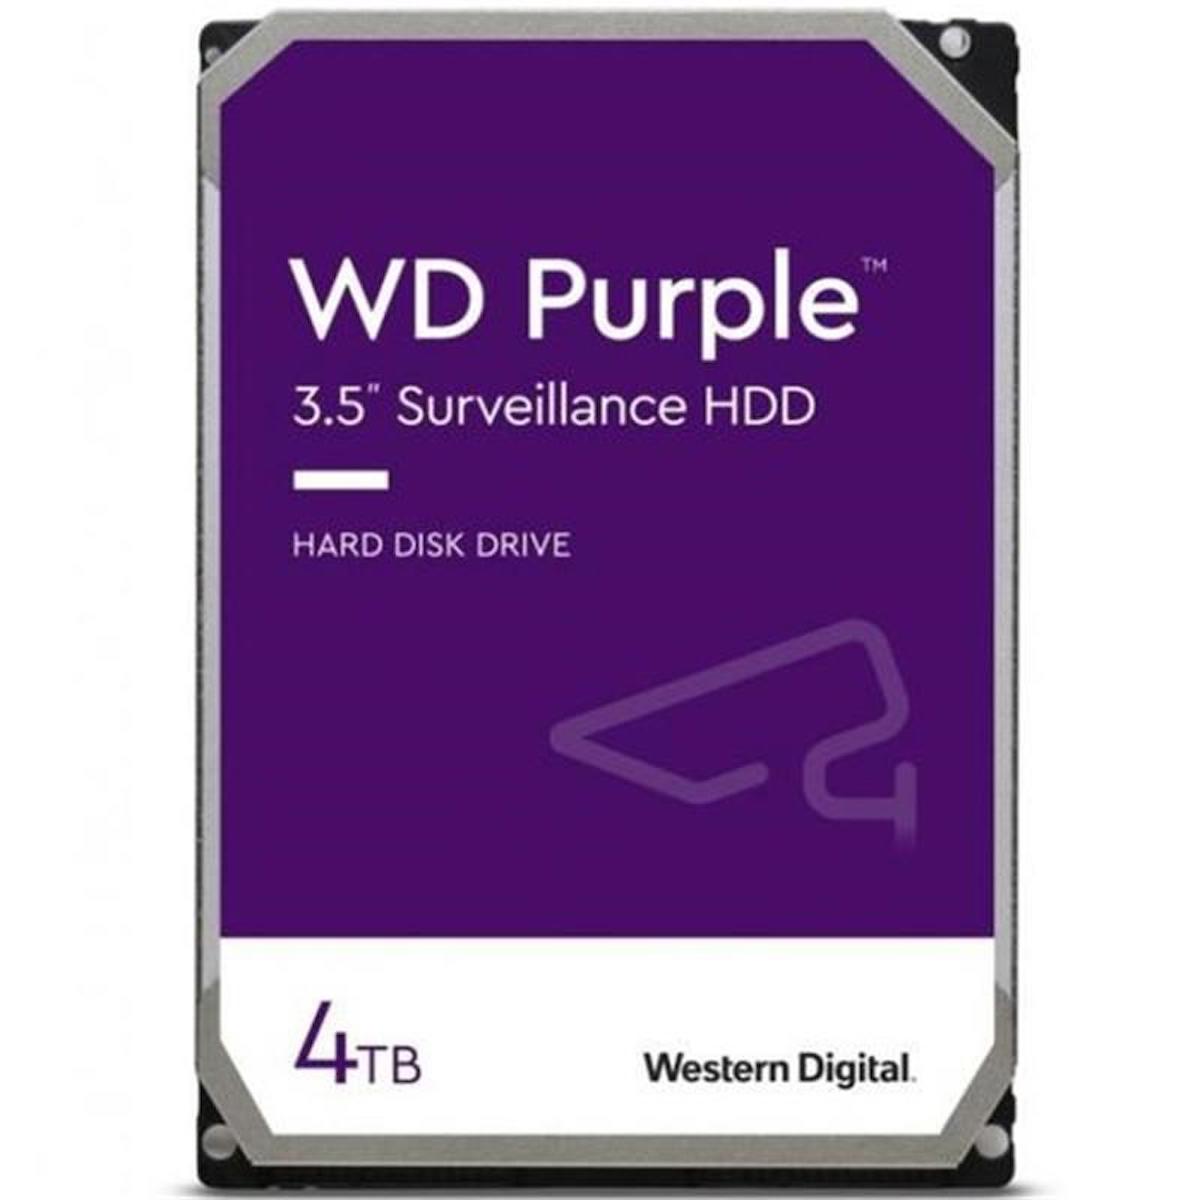 Western Digital WD Purple WD43PURZ 4 TB 3.5 inç 5400 RPM 64 MB SATA 3.0 Güvenlik Kamerası Harddisk